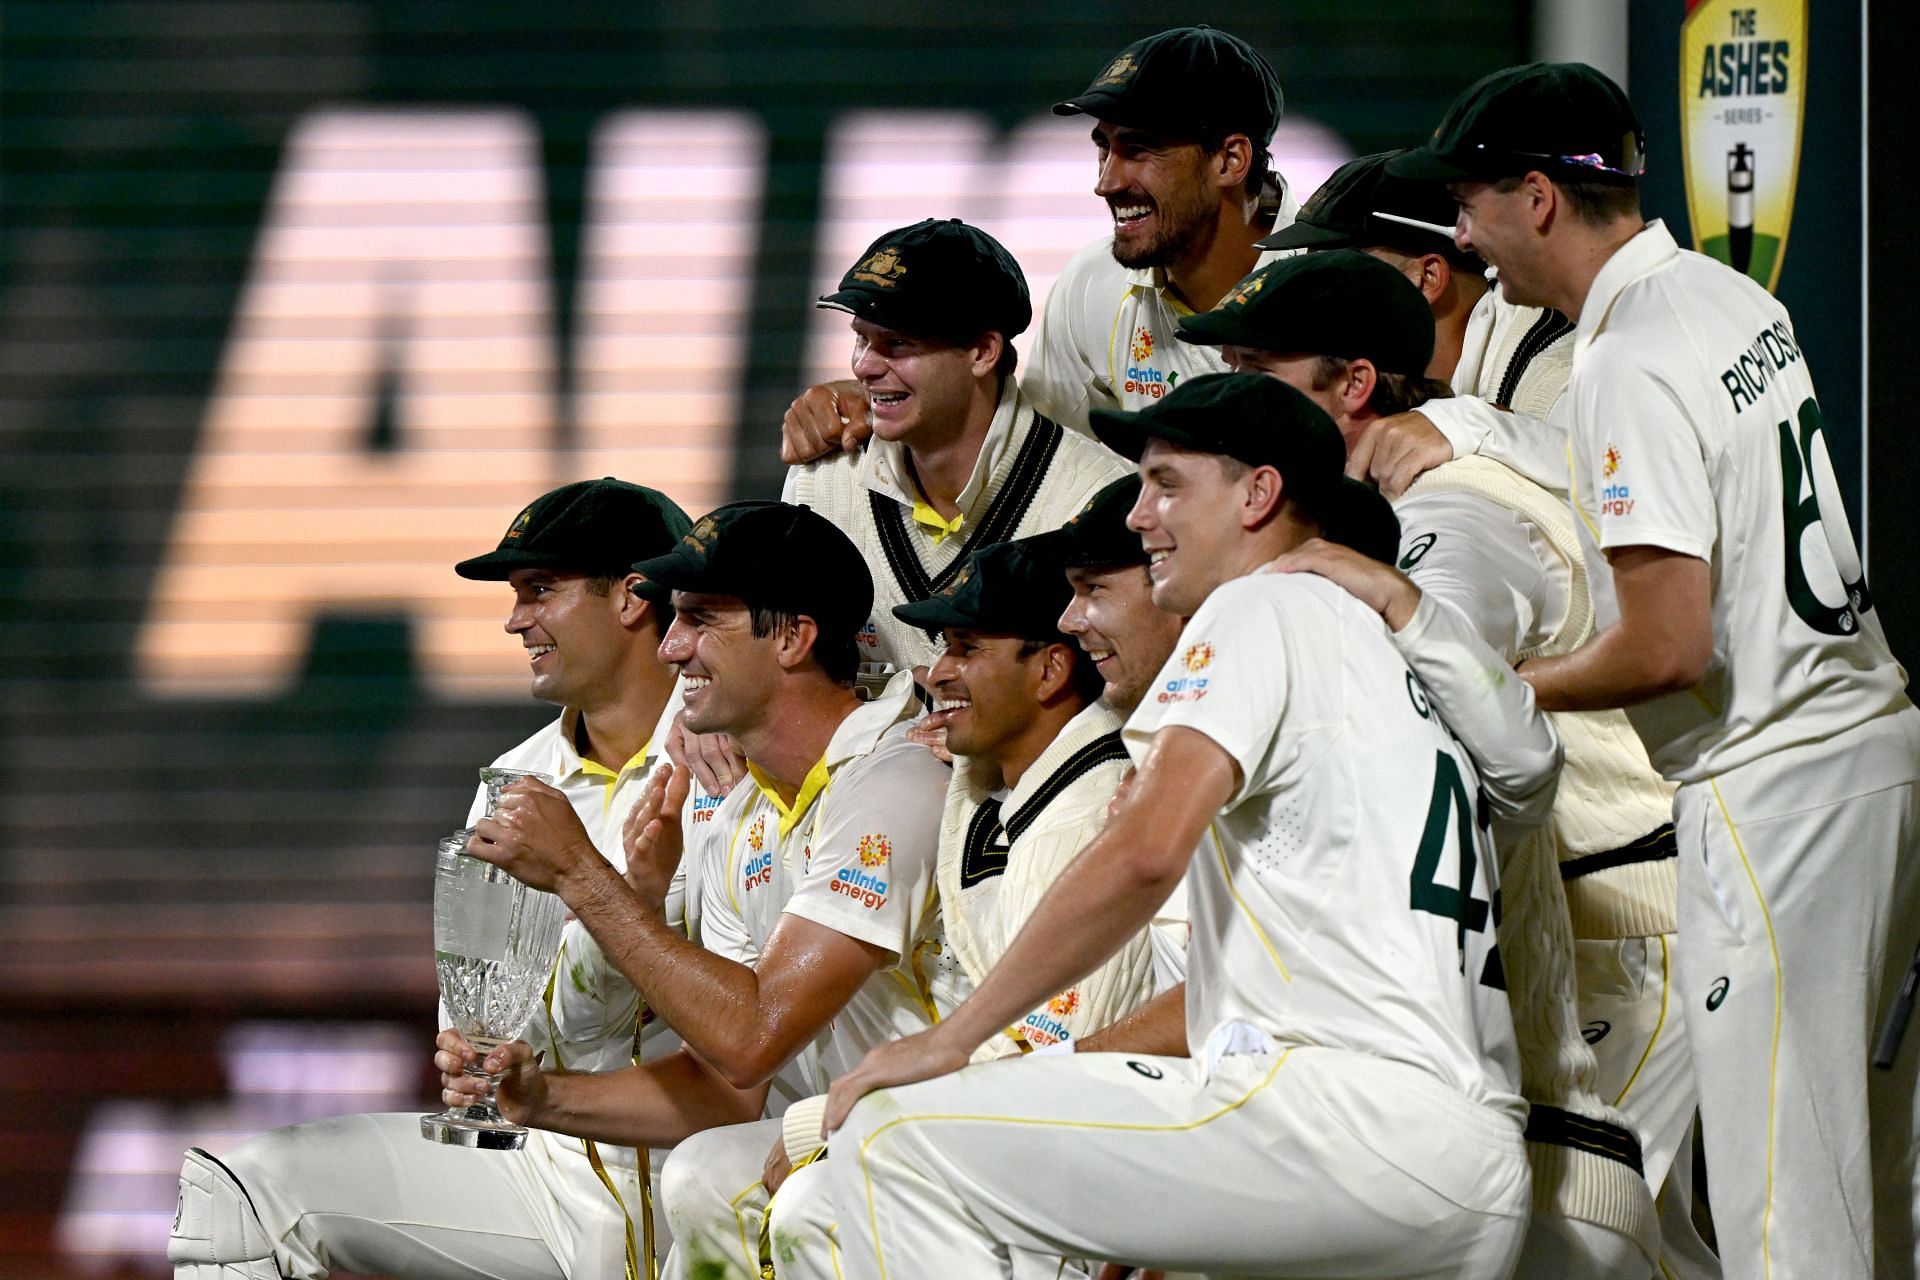 Australia cricket team. (Credits: Getty)